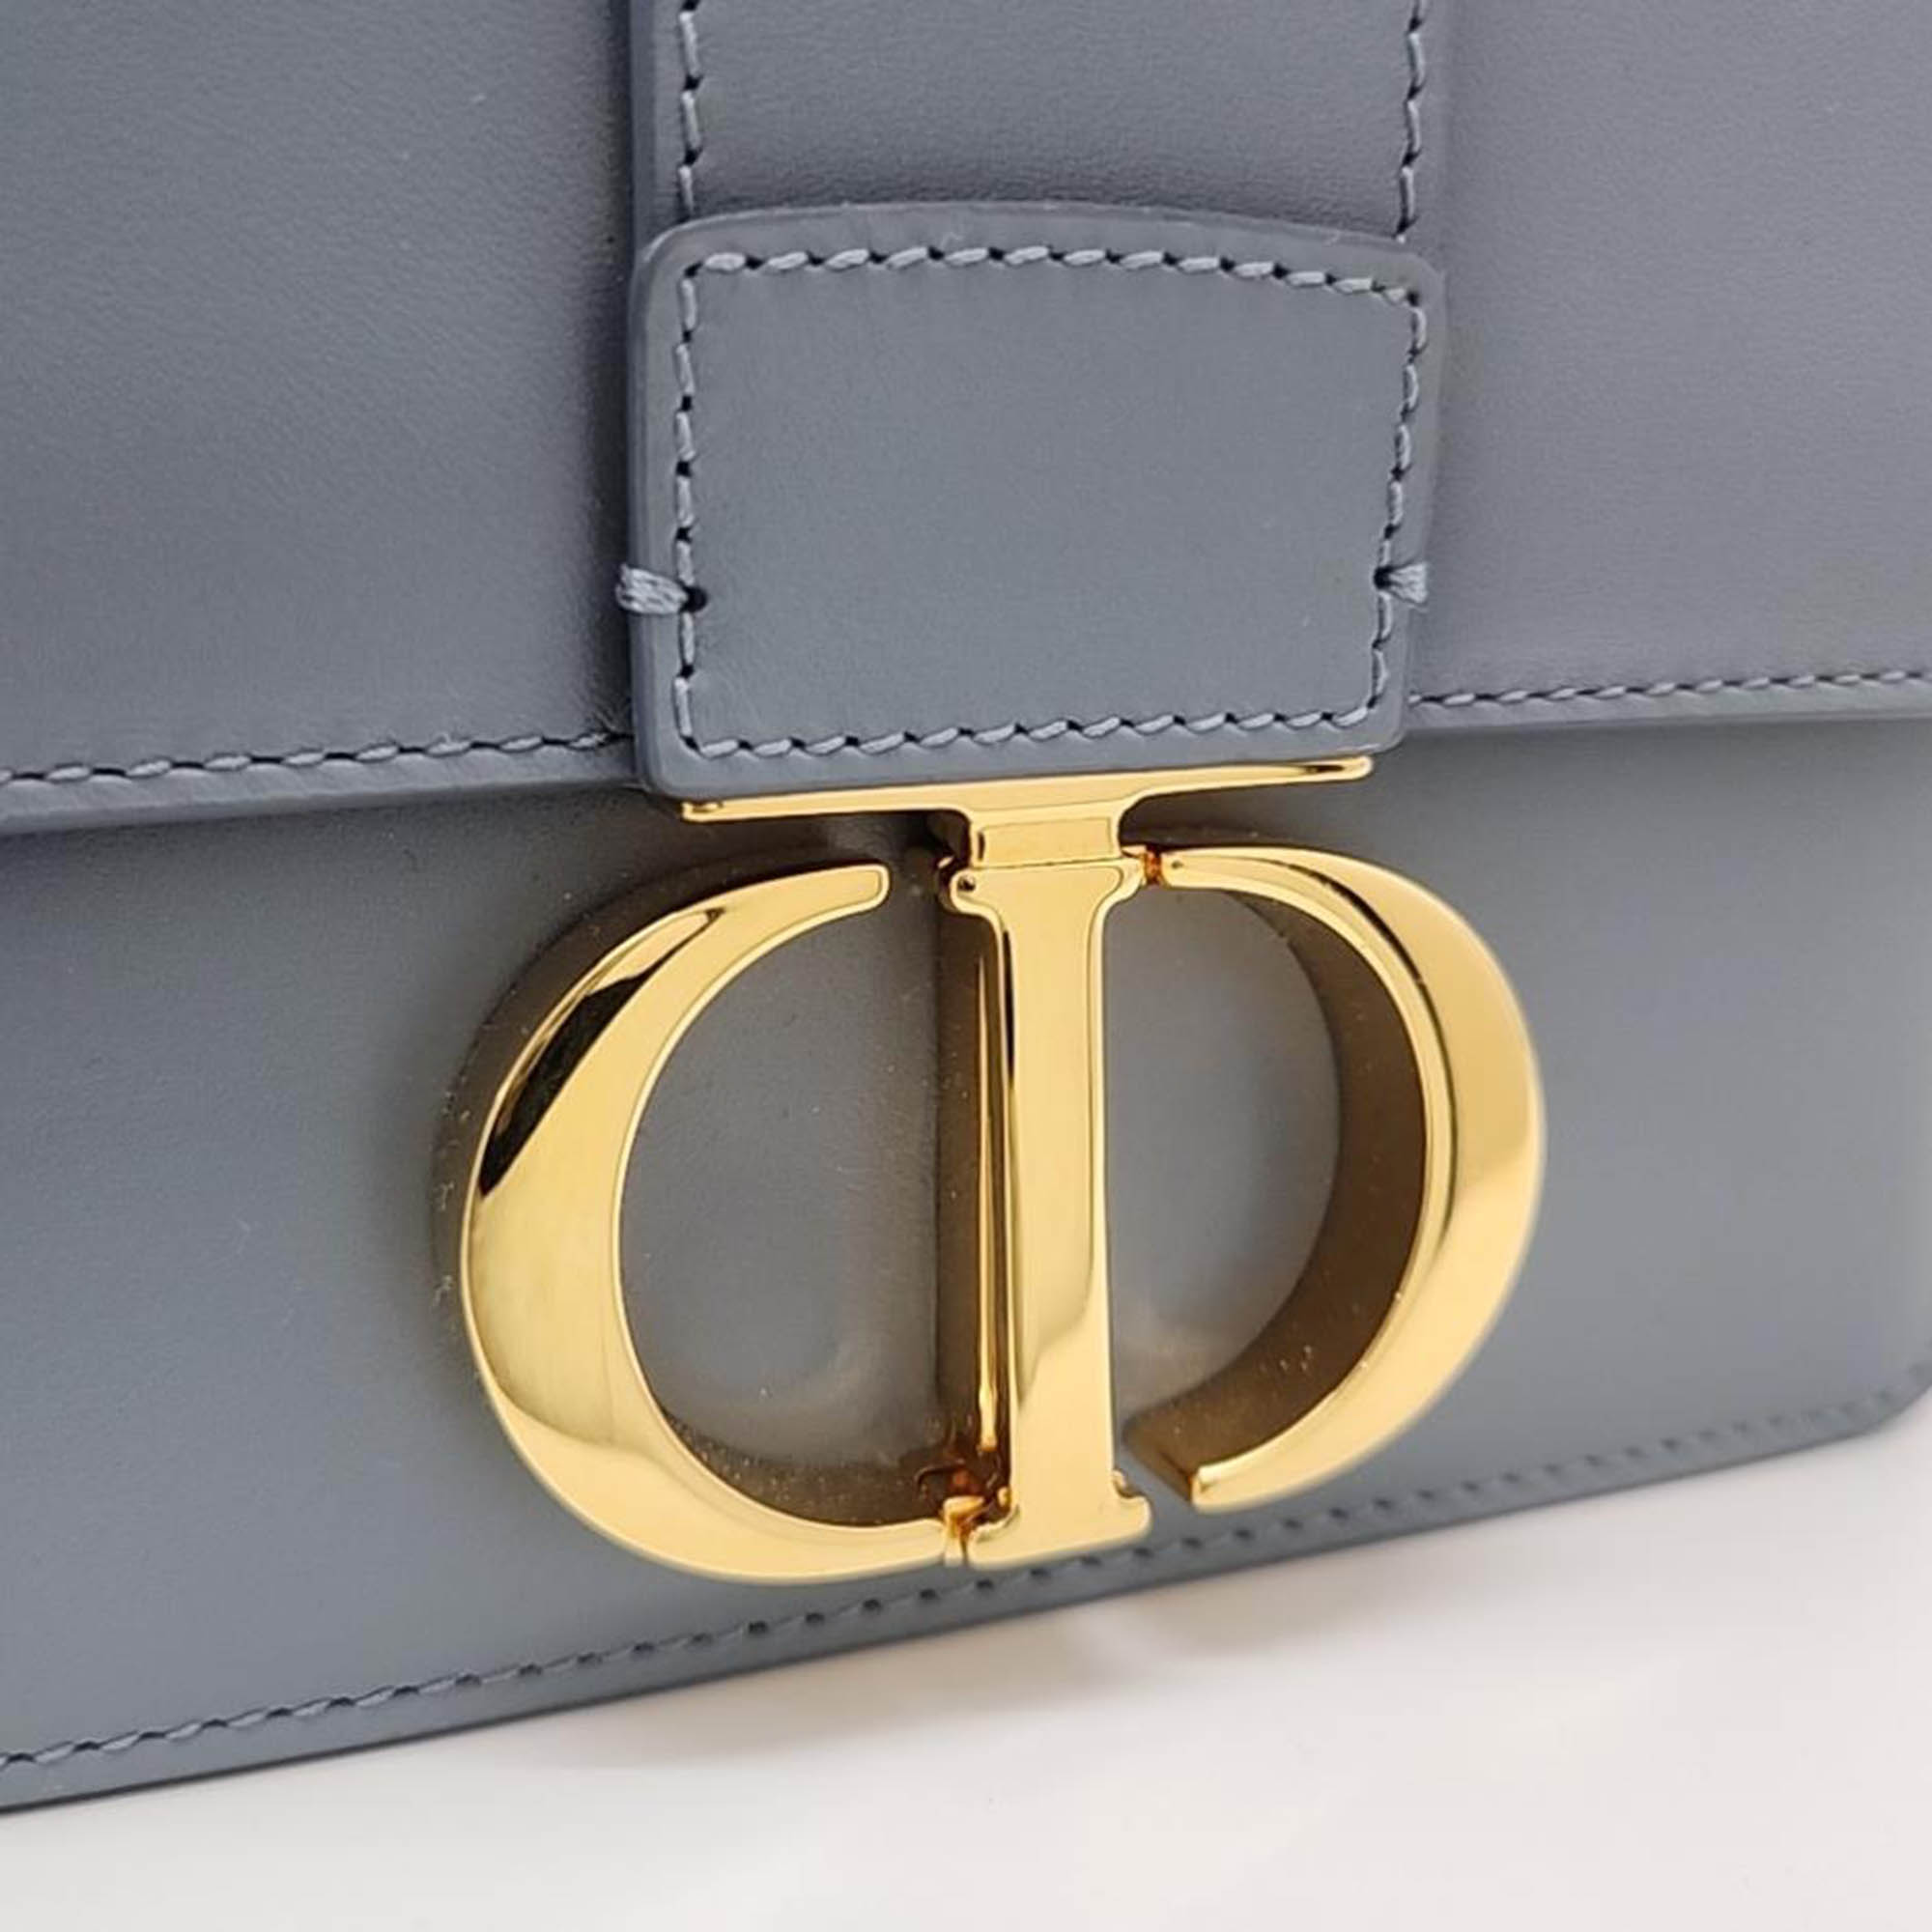 Christian Dior Montaigne Bag 30 Micro Bag